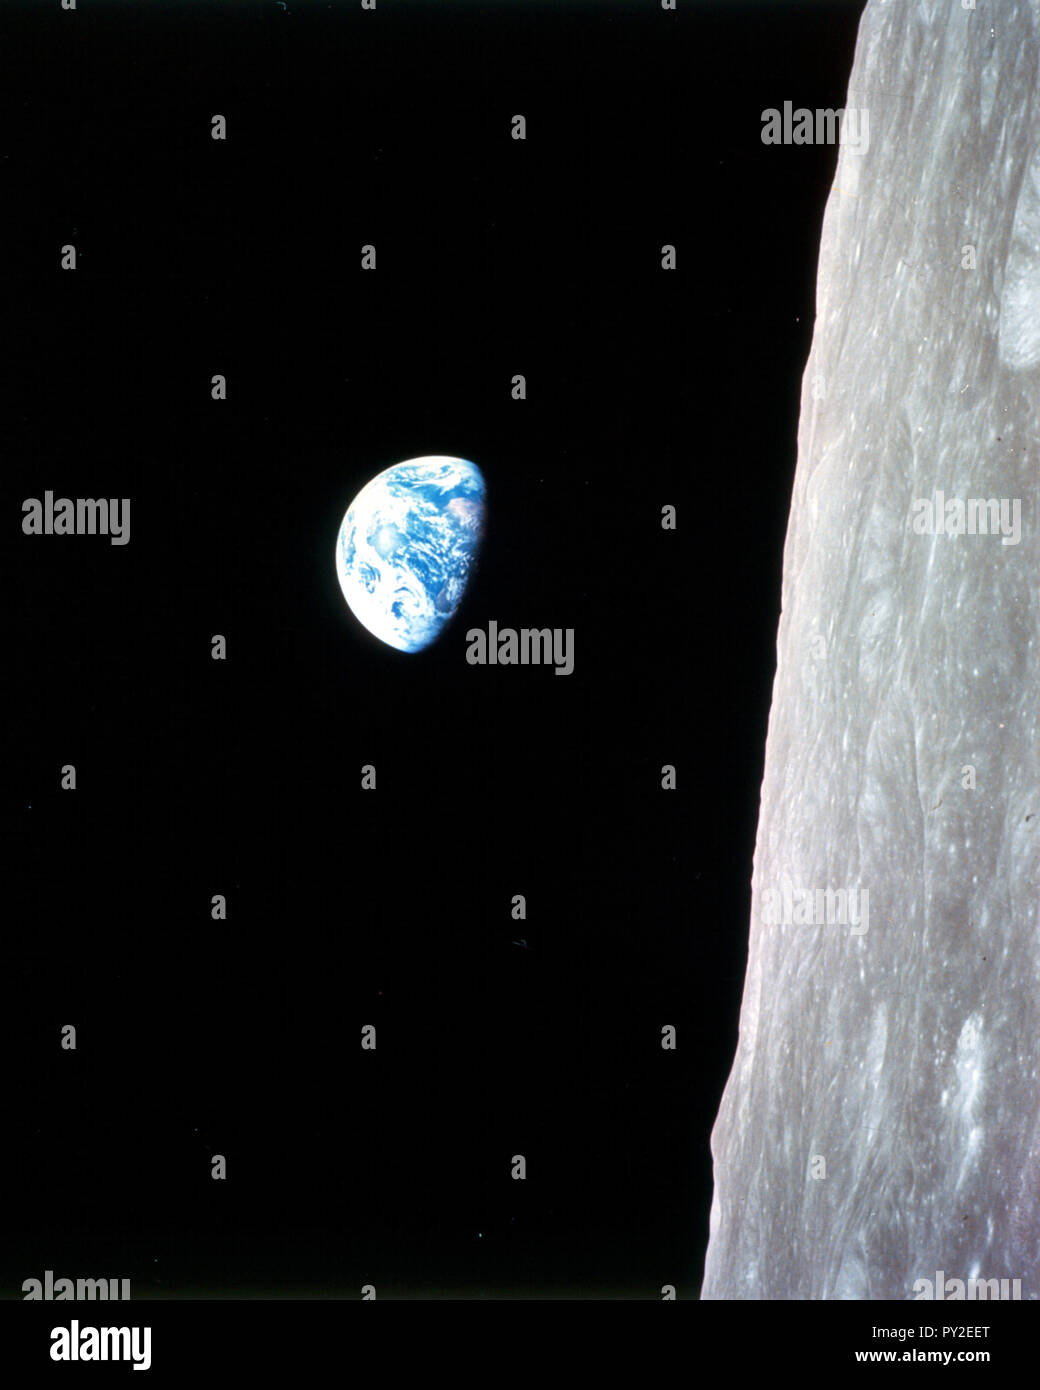 Earthrise - Apollo 8.jpg - PY2EET Stock Photo